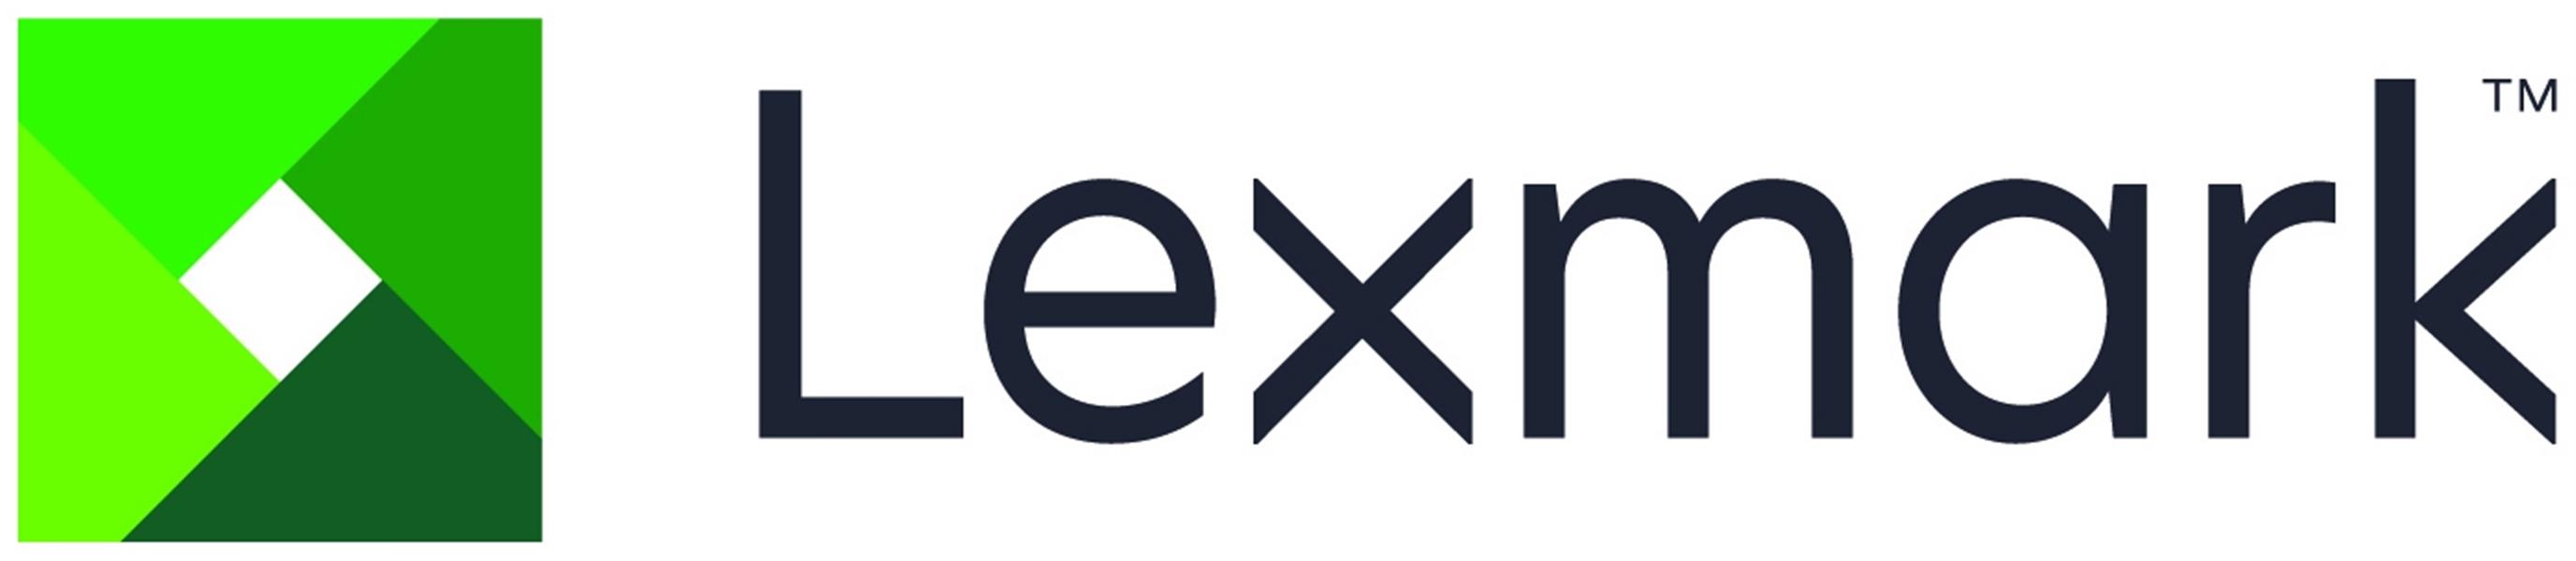 LEXMARK XC9235 Full 4yExtended Guarantee